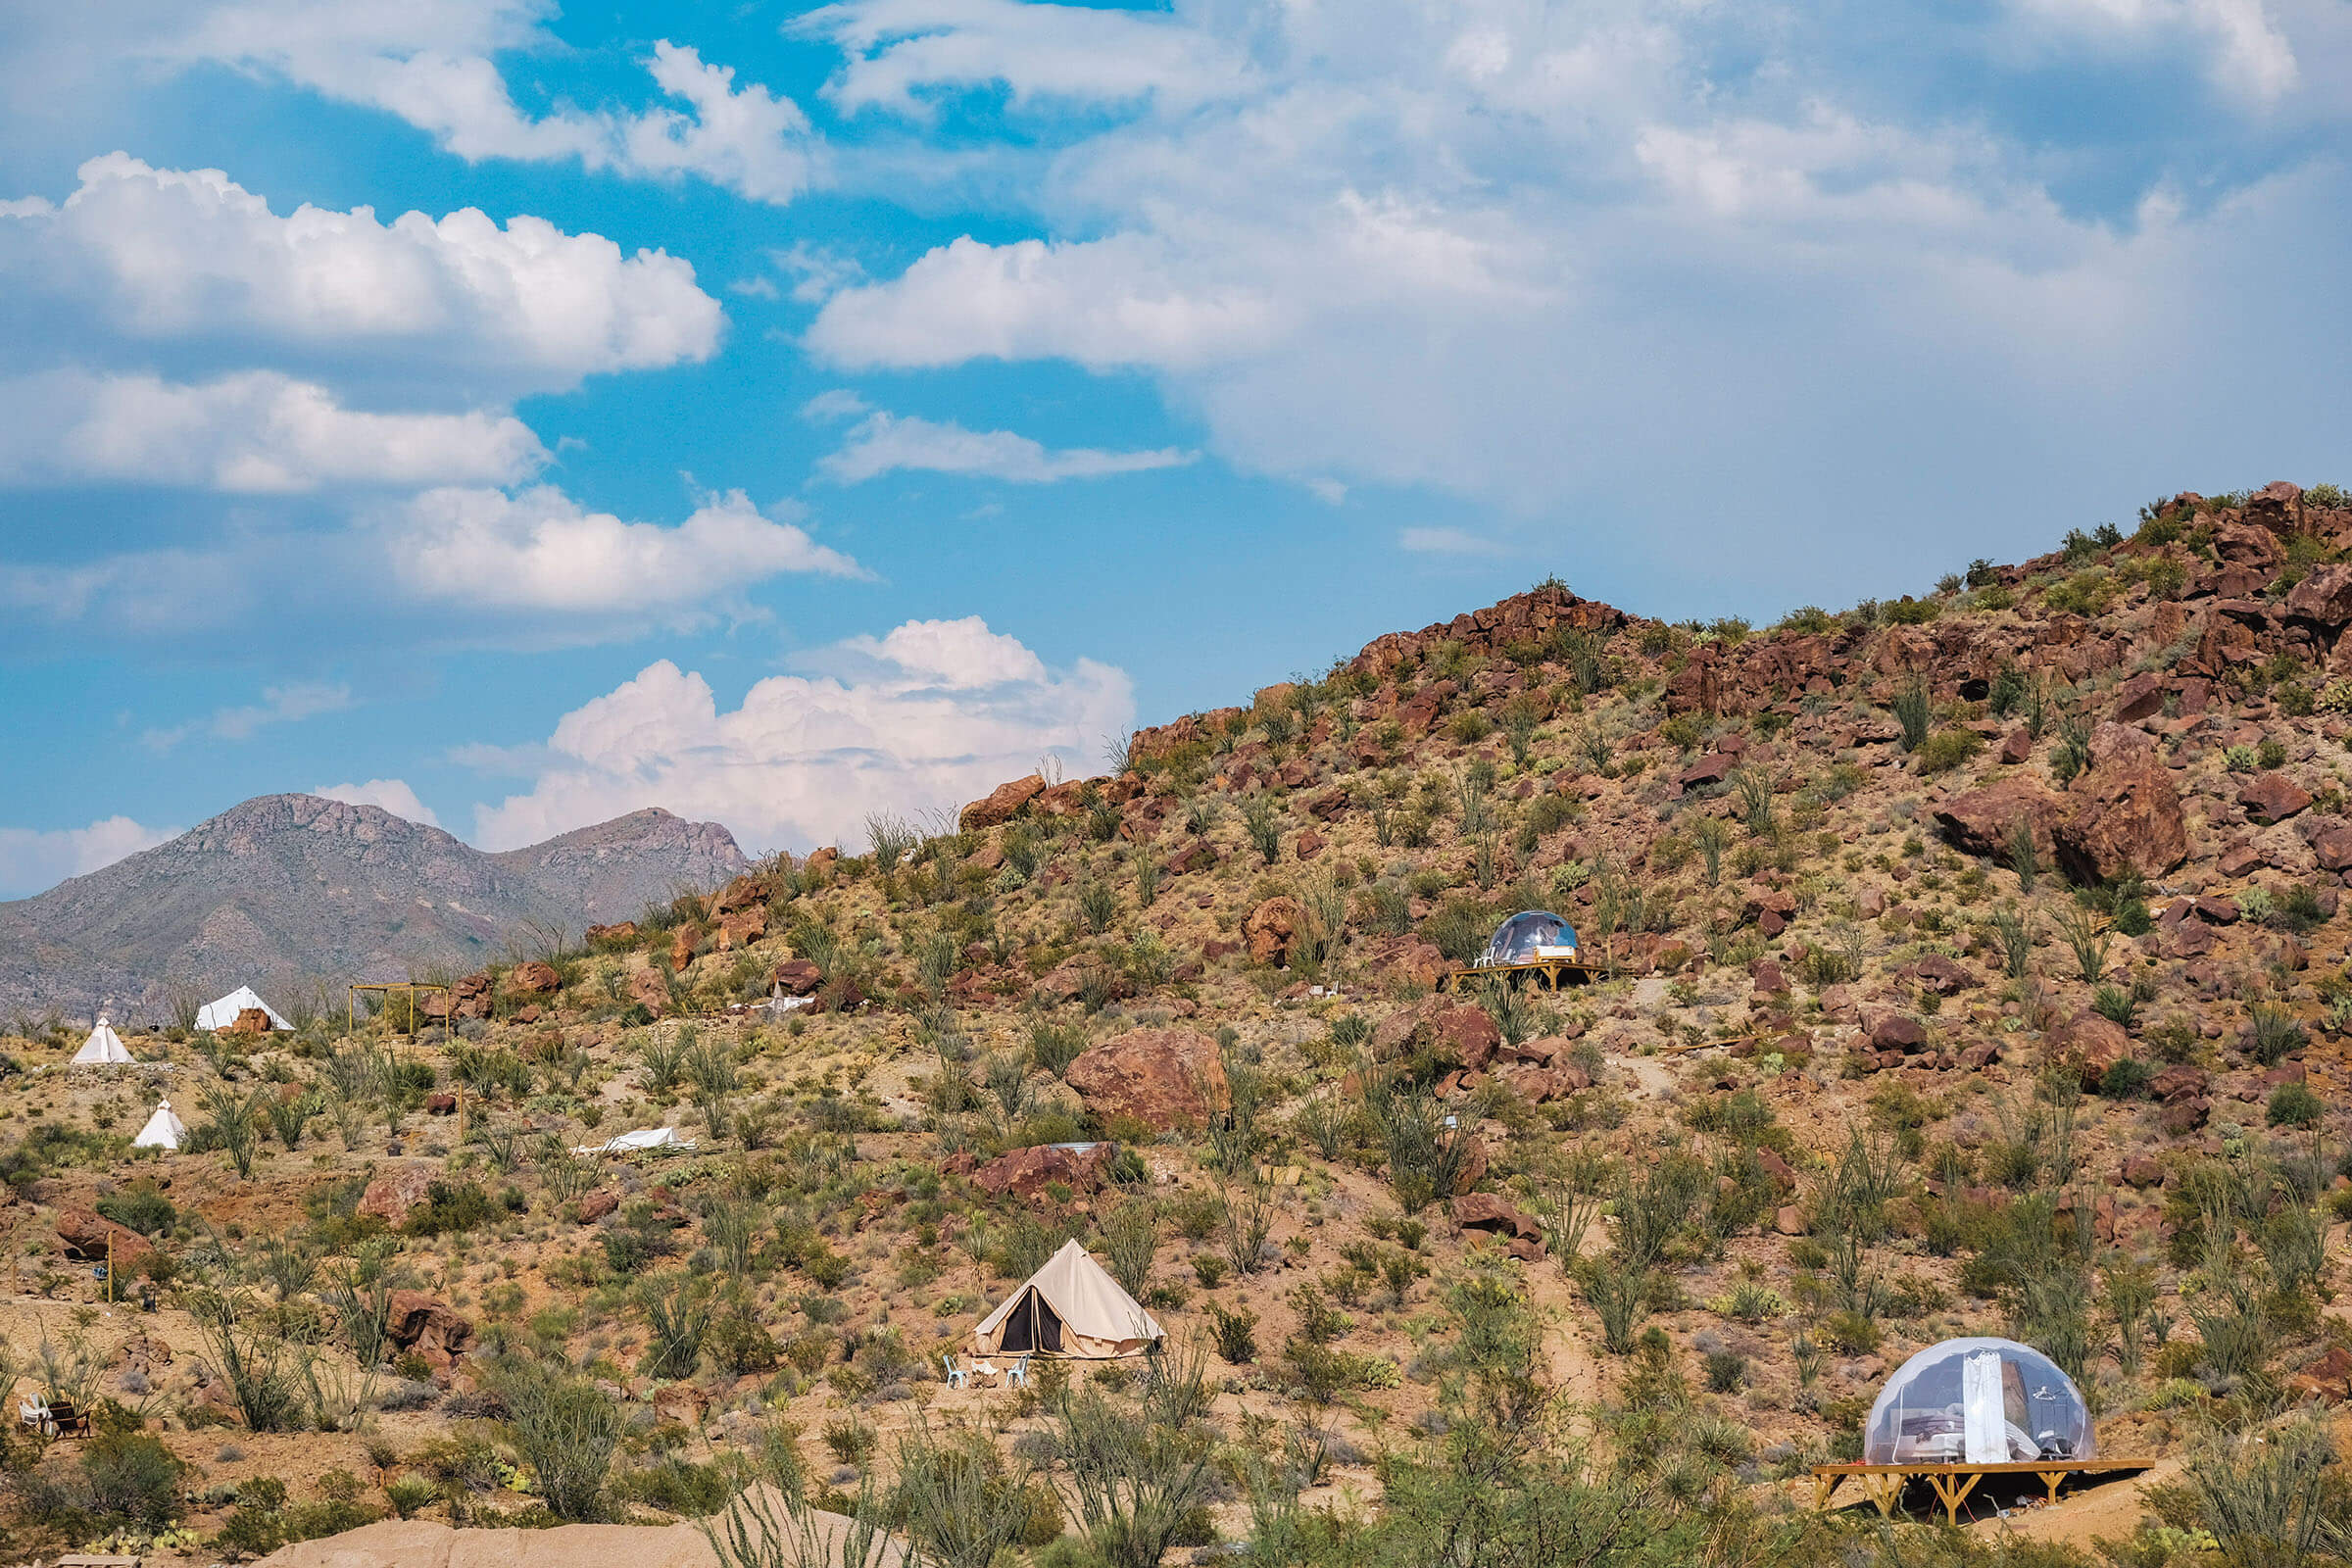 Clear 'bubble' style lodging dots a desert hillside under blue sky